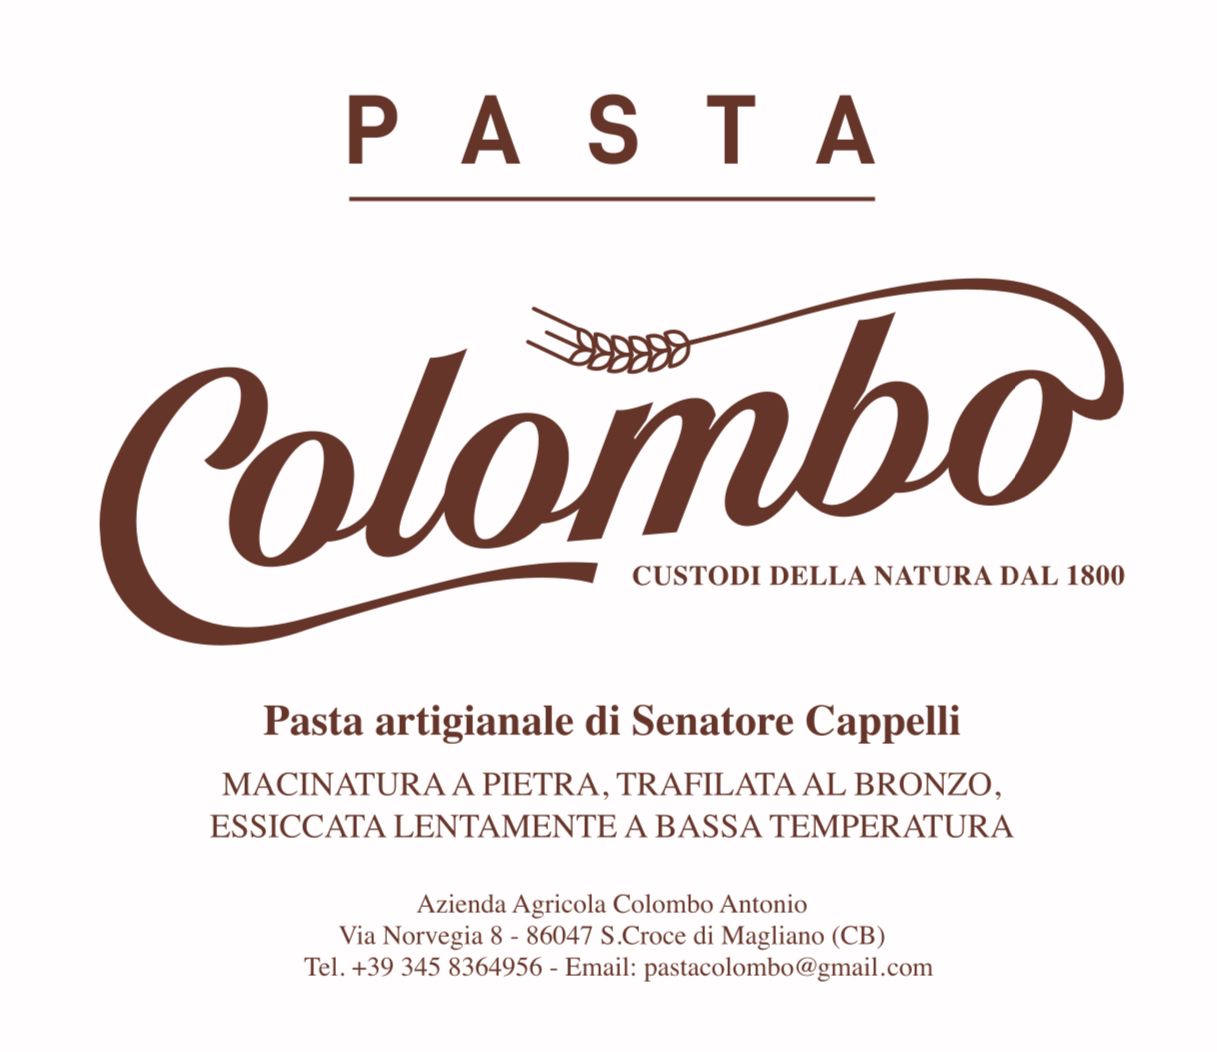 Penne Rigate  Artisanal pasta by Senatore Cappelli, Bronze drawn, slowly dried